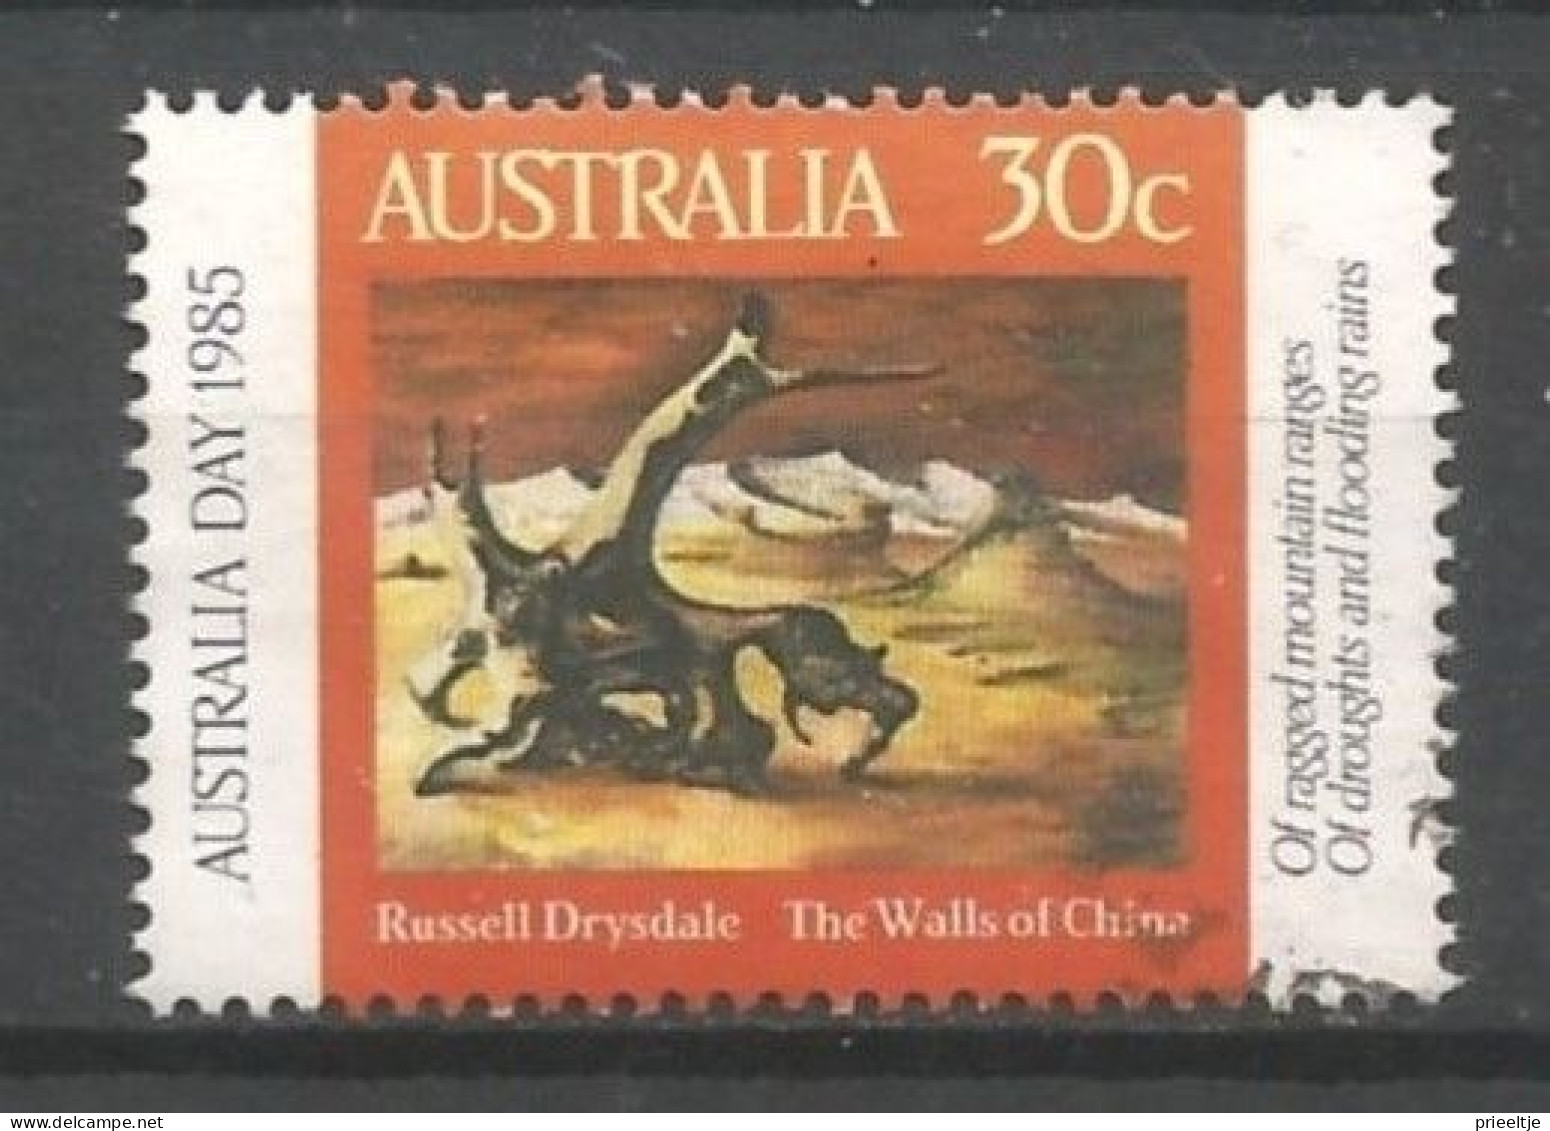 Australia 1985 Australia Day Y.T. 891 (0) - Used Stamps